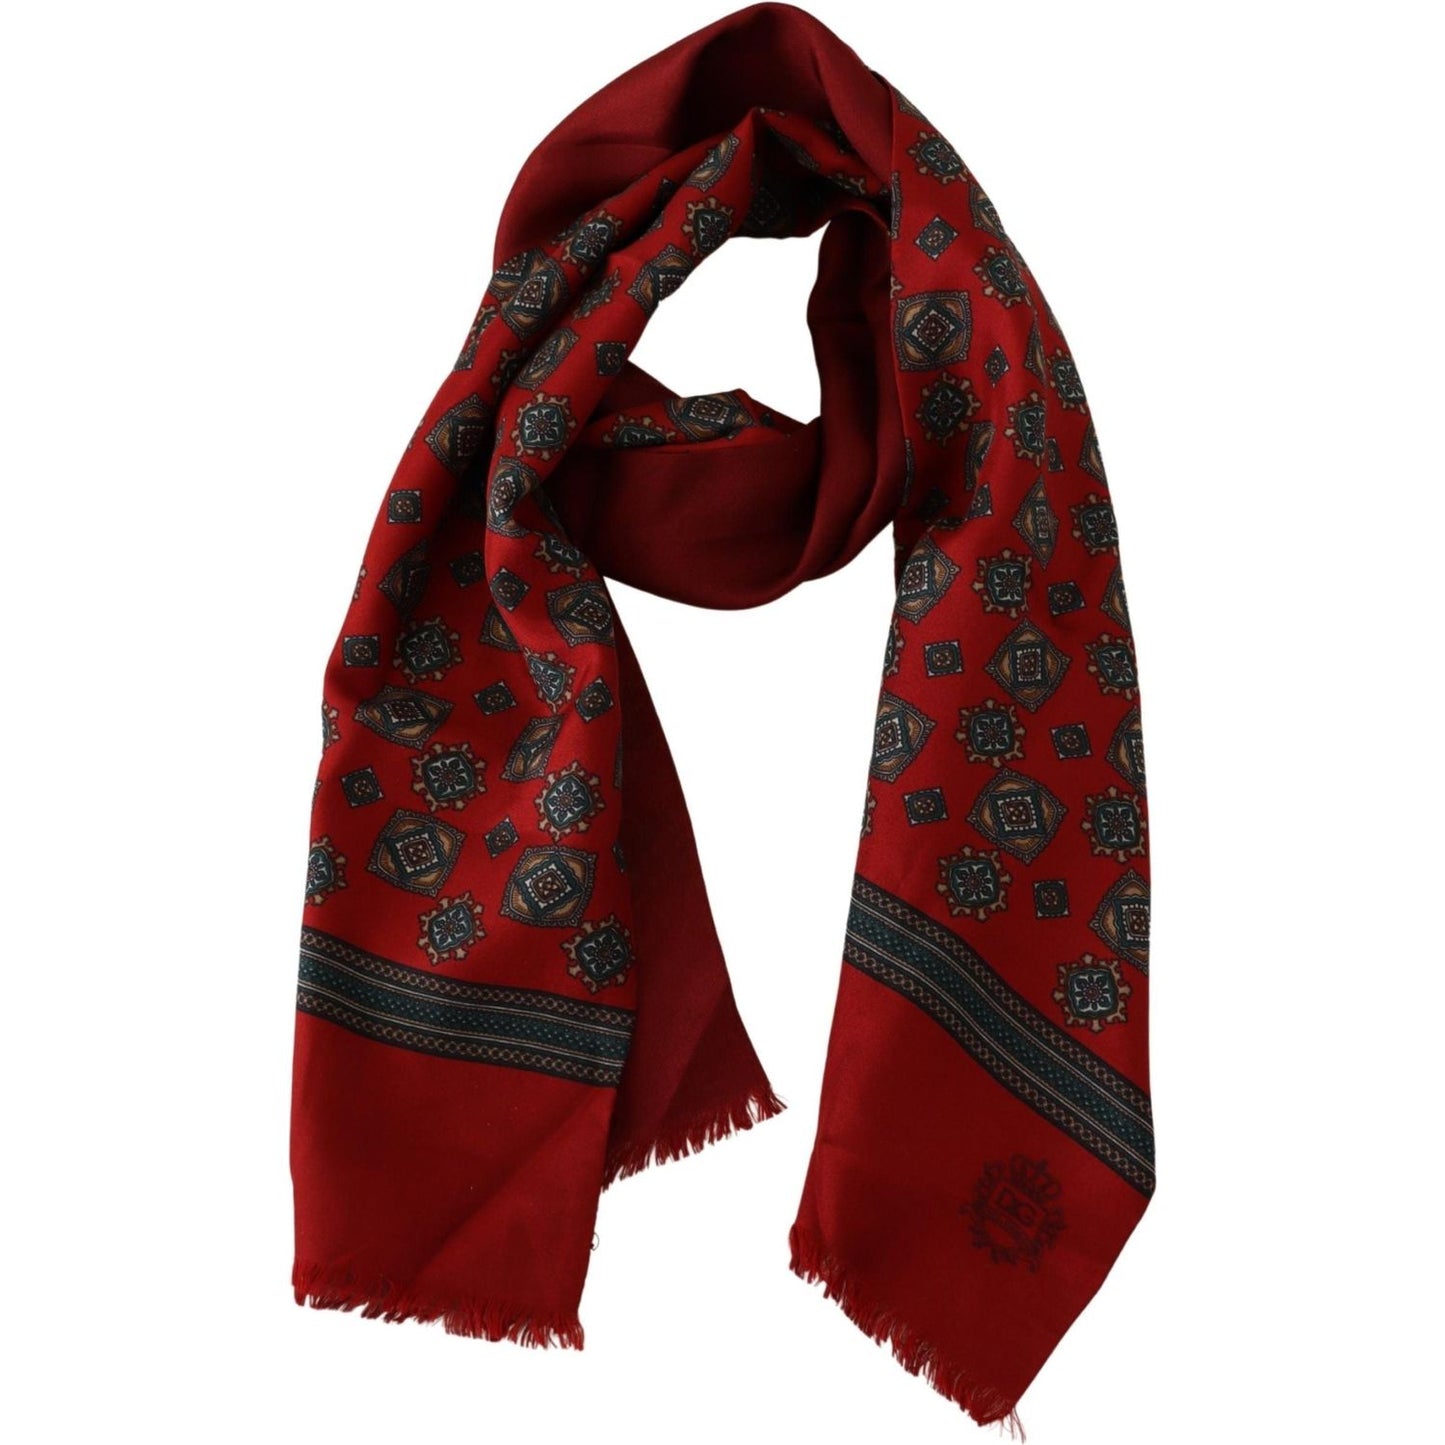 Dolce & Gabbana Elegant Red Silk Scarf red-patterned-100-silk-wrap-women-shawl-scarf IMG_0062-scaled-a8d5e2c6-453.jpg